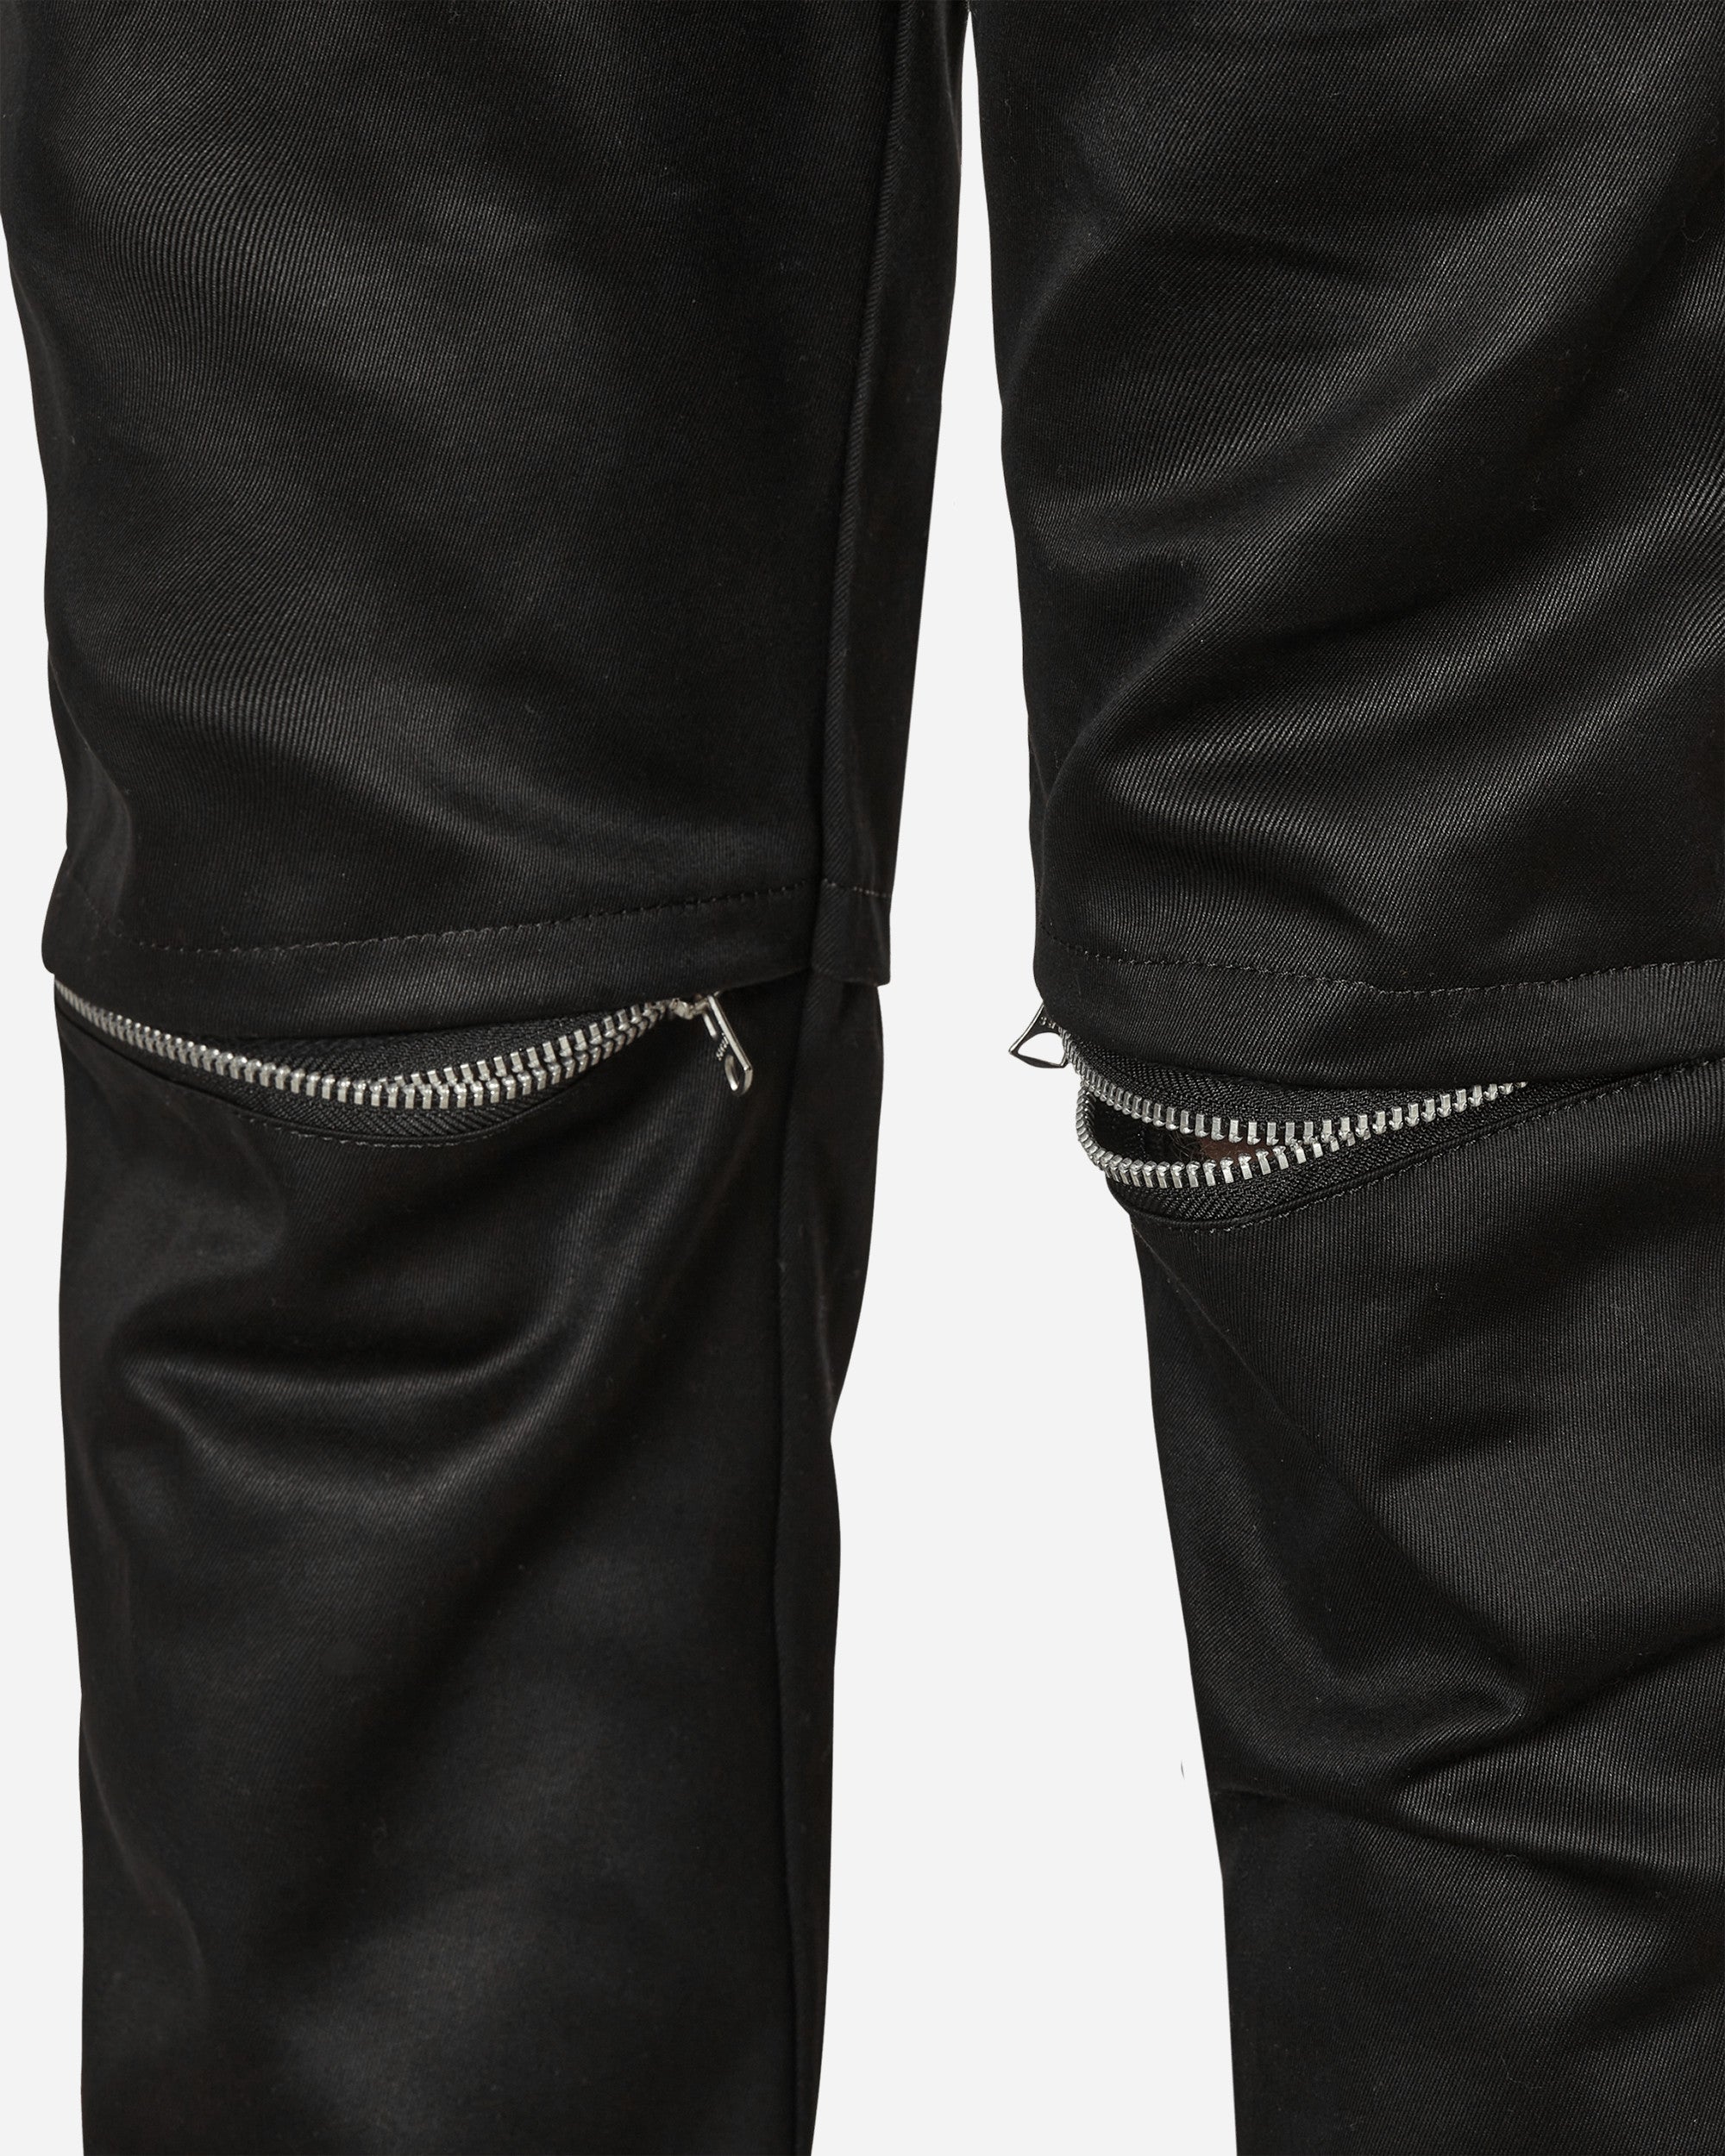 Sacai Cotton Chino Knee Zip Pants Black Pants Trousers 22-02822M 001